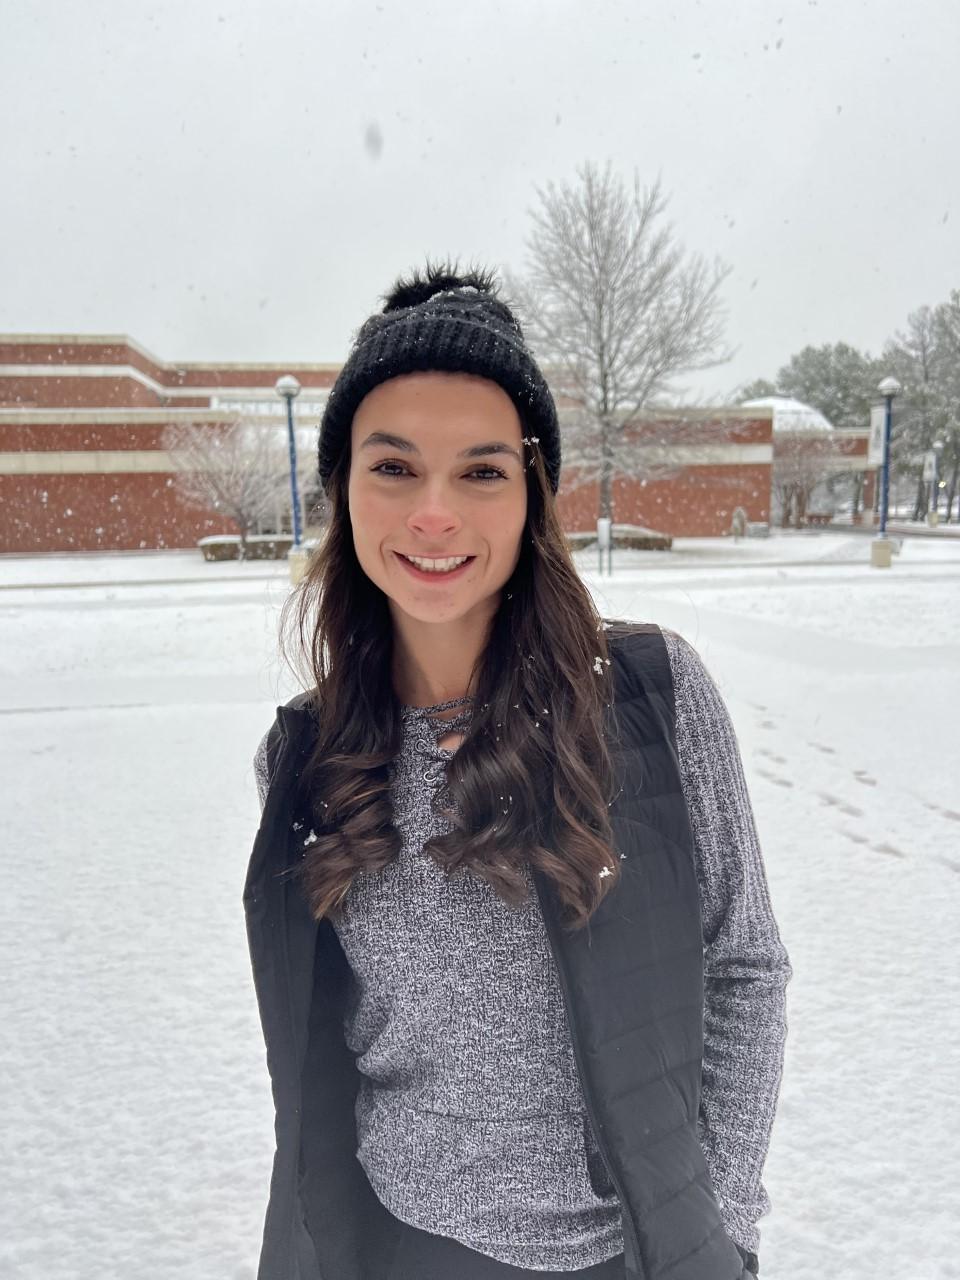 UAFS校园被雪覆盖. 伊莎贝拉穿着冬装站在校园中心附近. 她在微笑. 